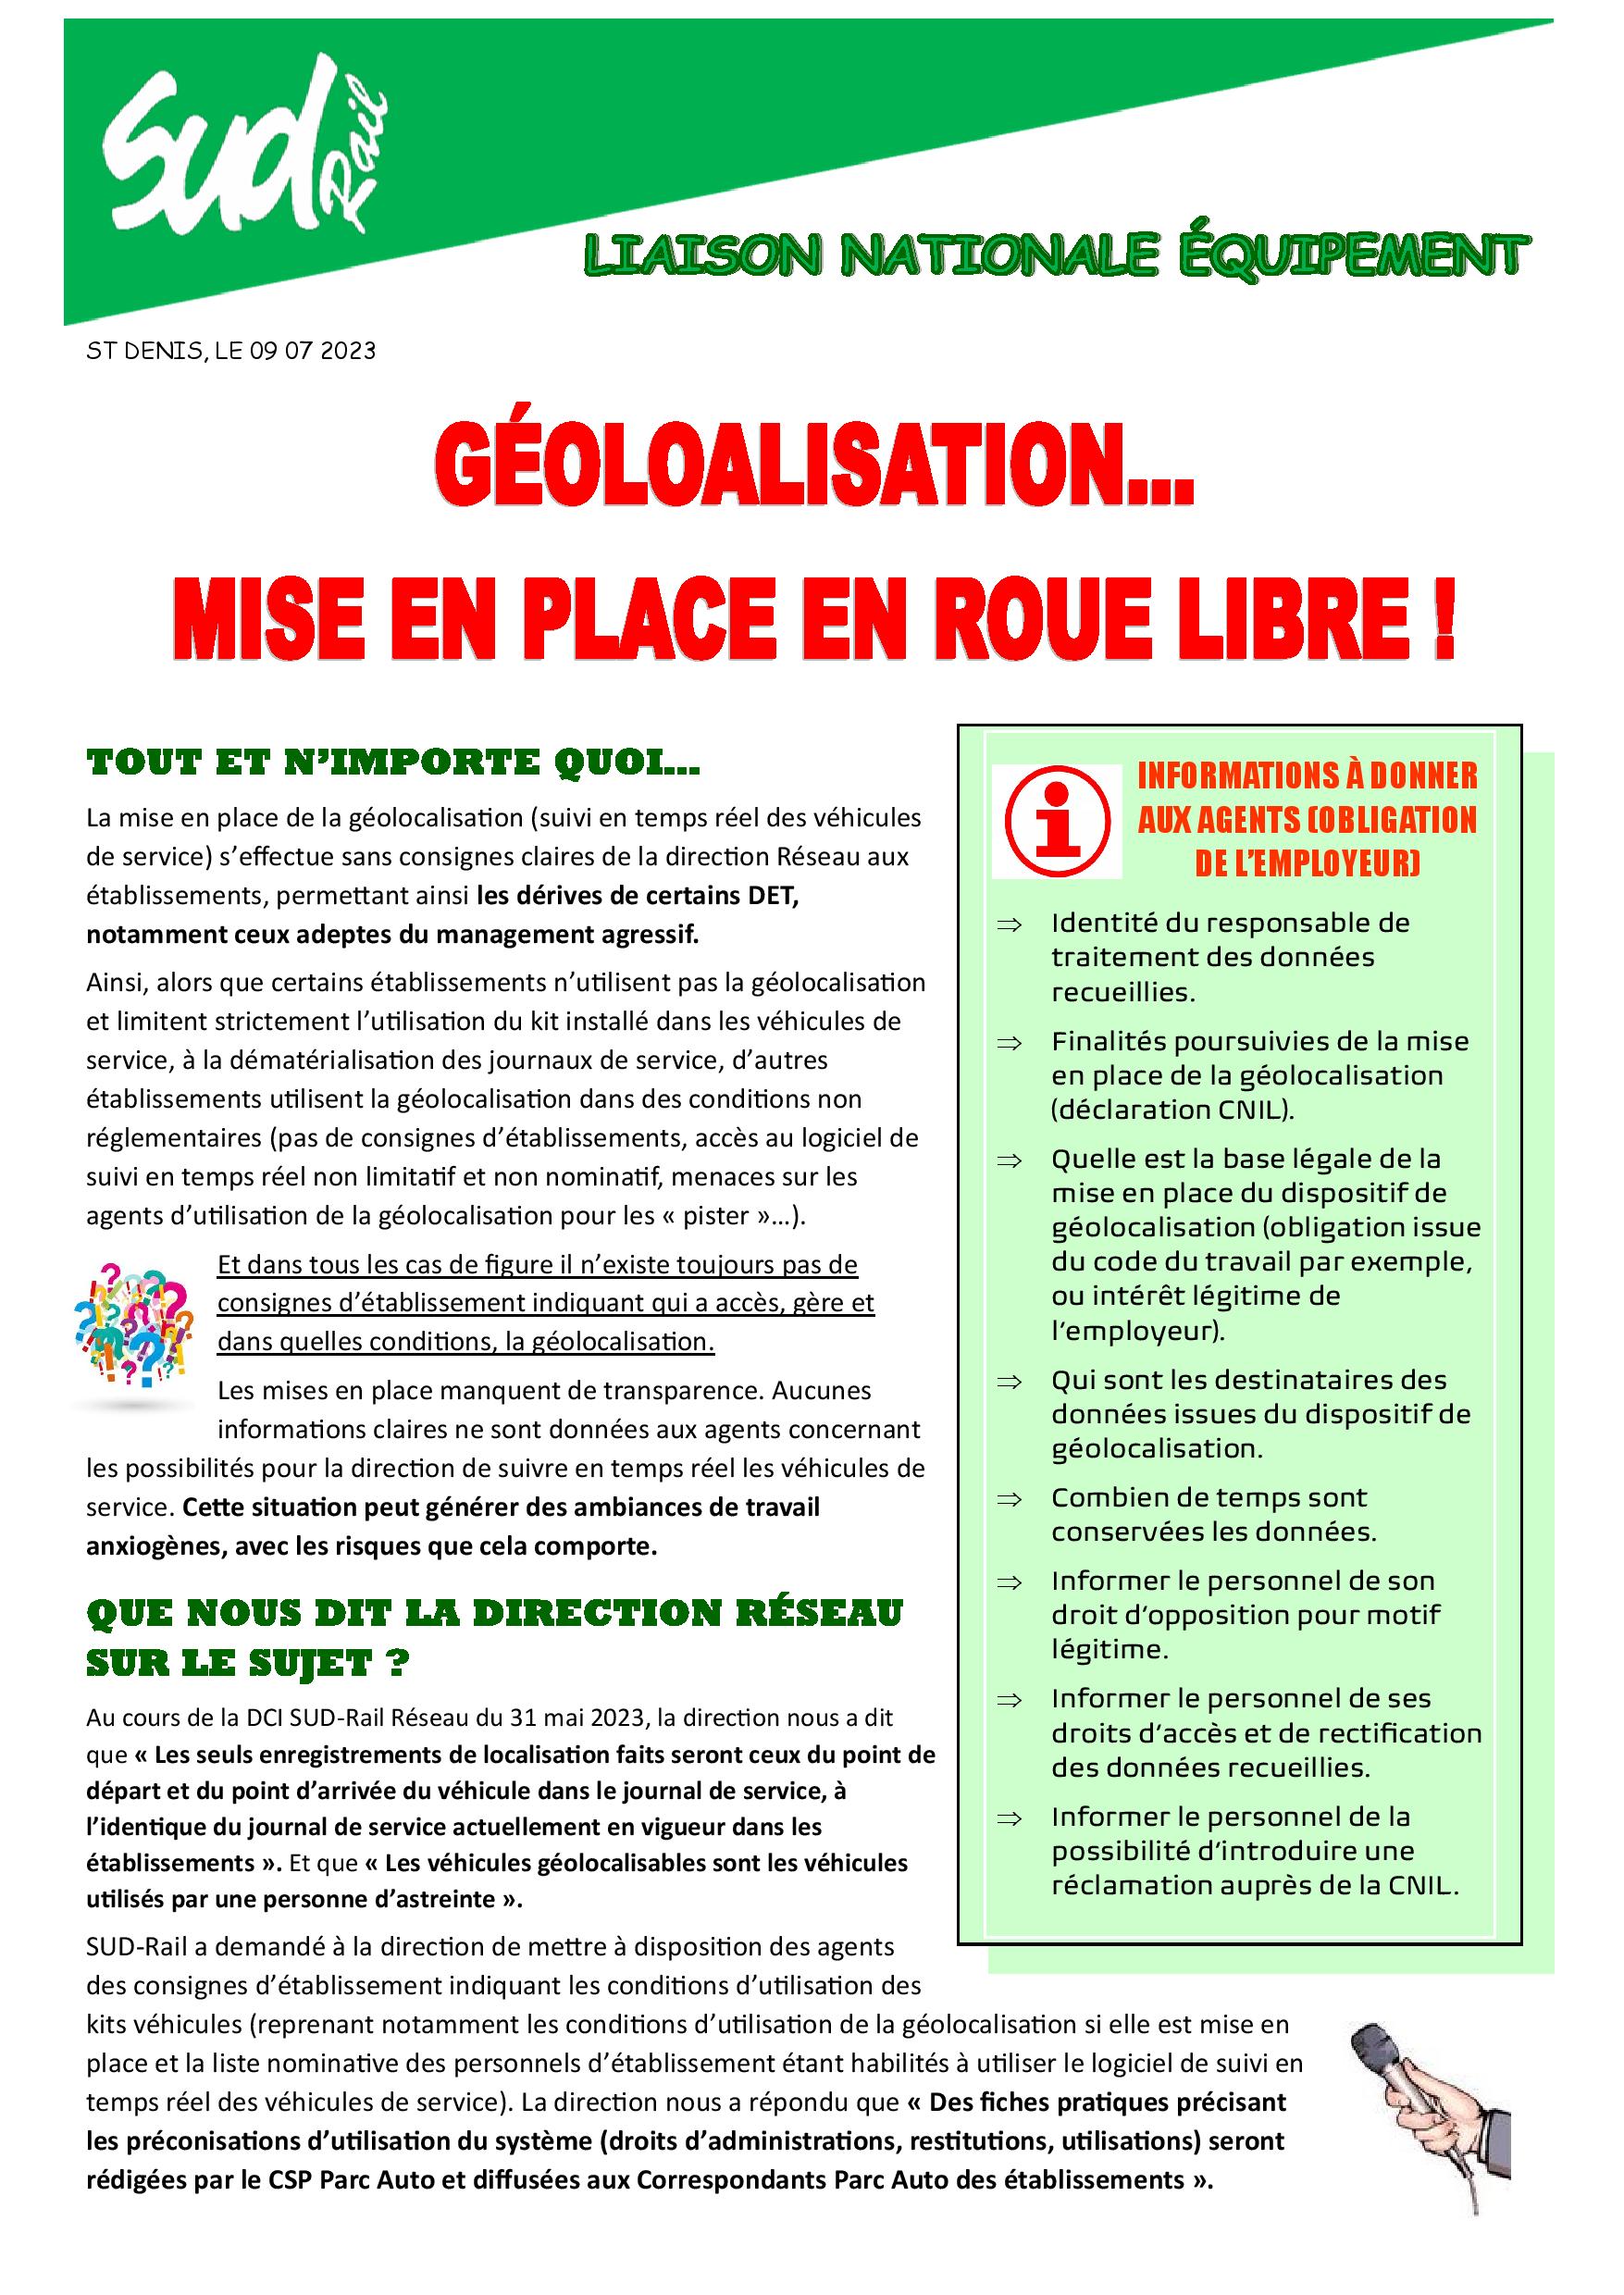 20230710 LNEquipement geoloalisation page 001